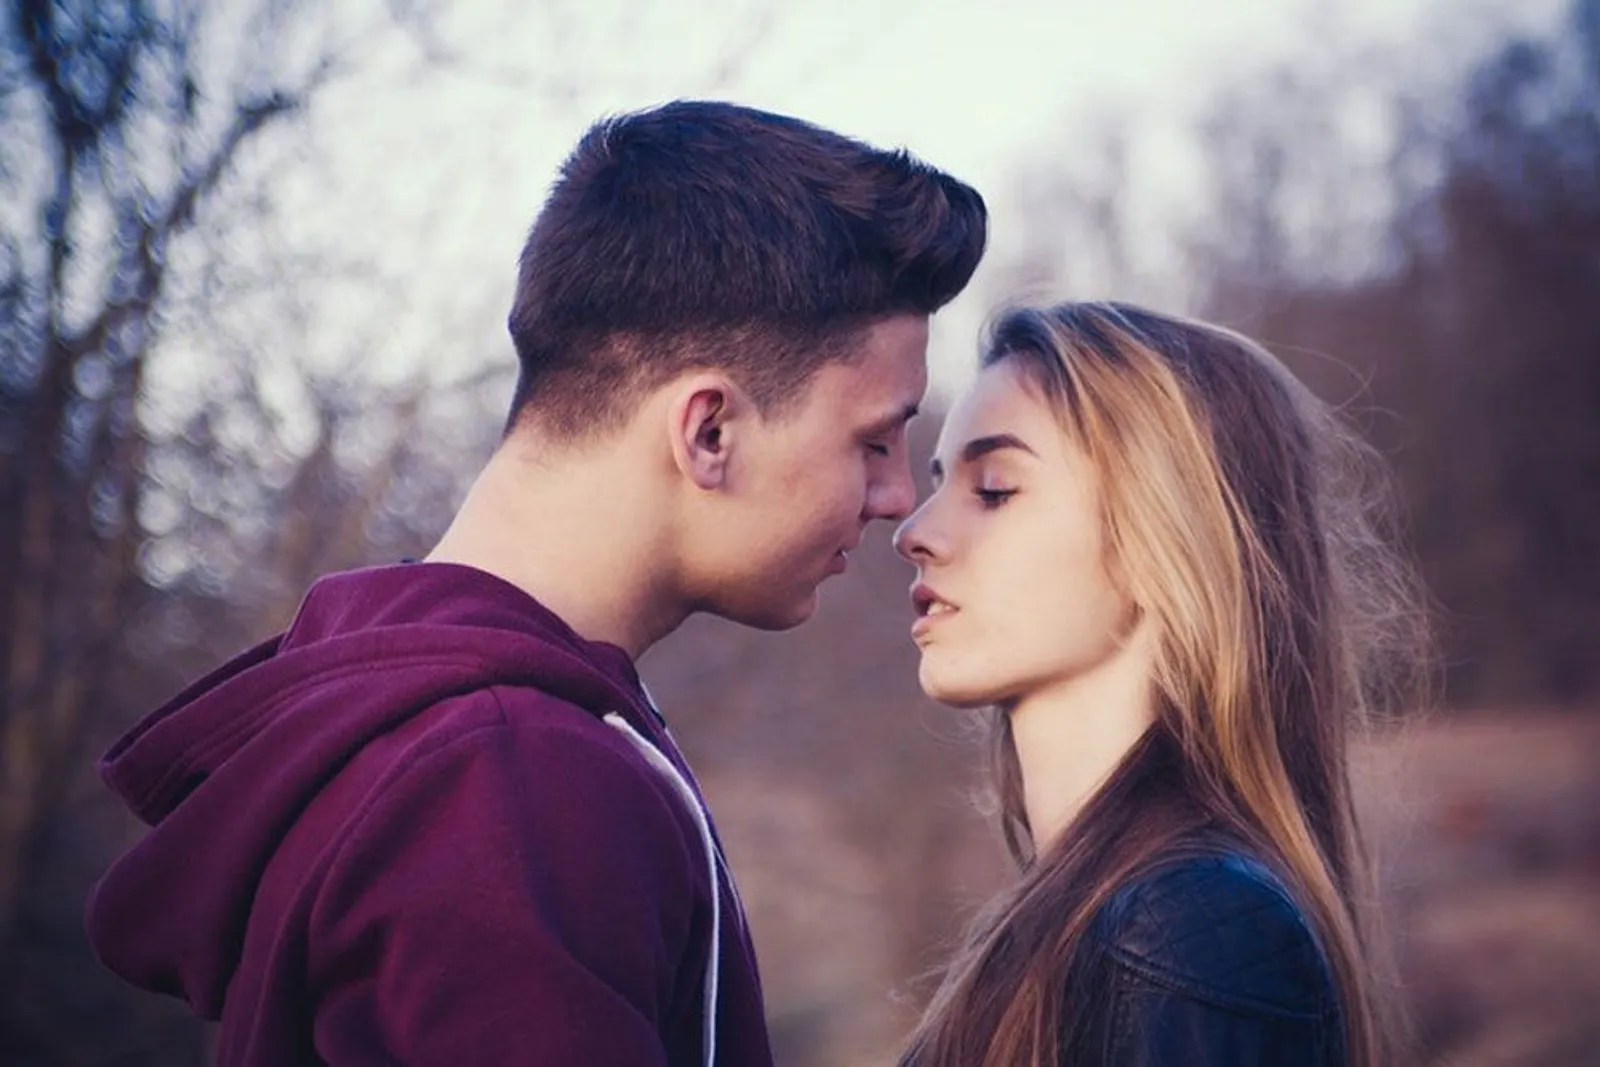 Gagal Mesra! Ini 5 Hal yang Nggak Boleh Dilakukan Saat Berciuman